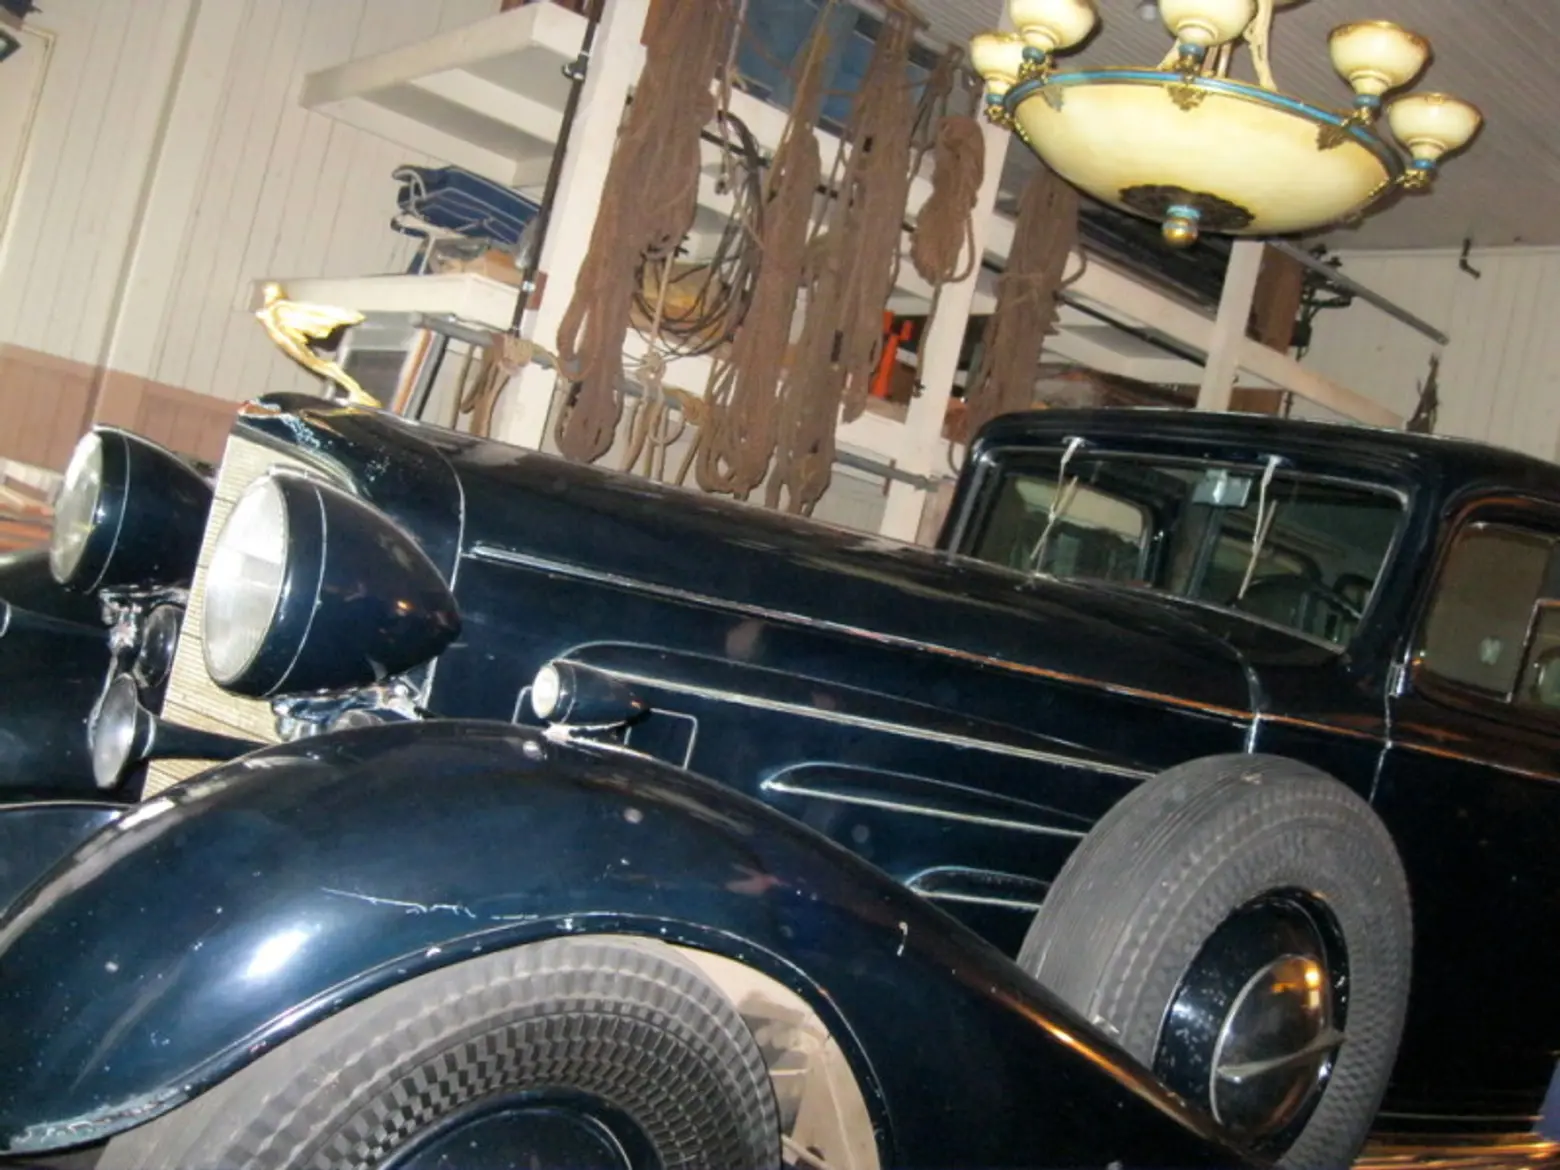 Huguette Clark, Bellosguardo, Empty Mansions, Heiress, Bill Dedman, Chrysler Royal Eight converitible, 1933 Cadillac V-16 seven-passenger limousine